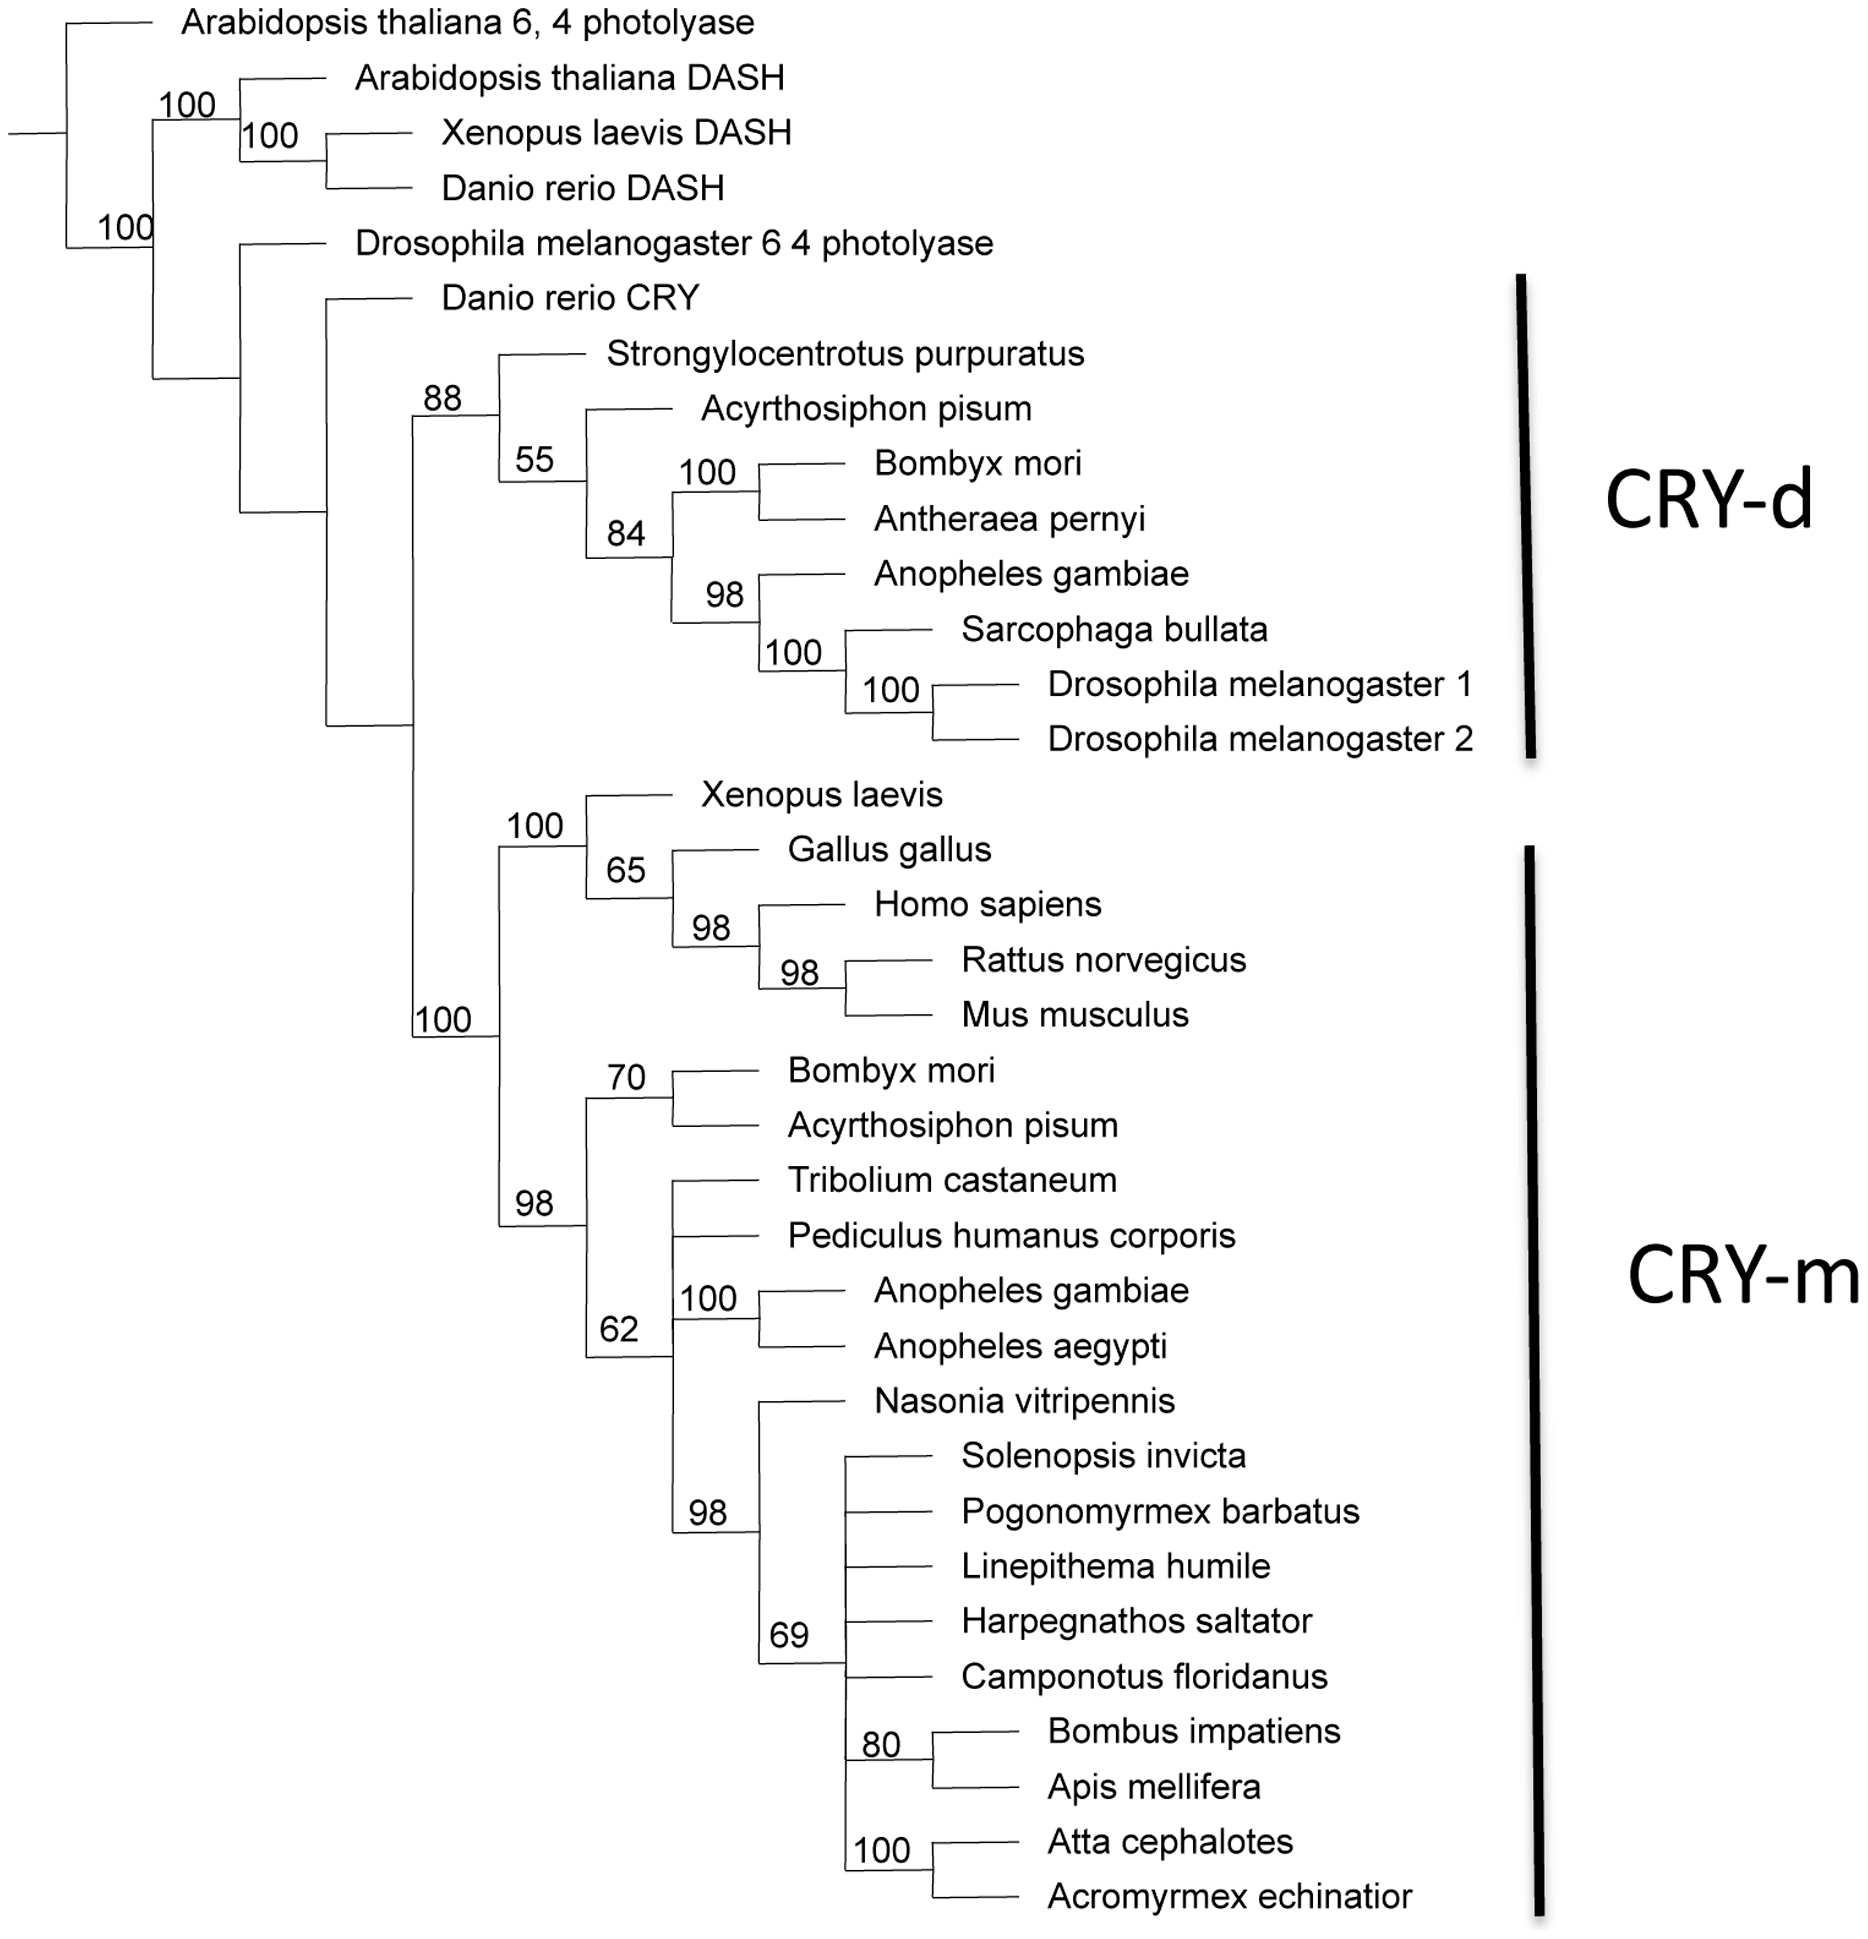 Parsimony tree for cryptochrome gene family